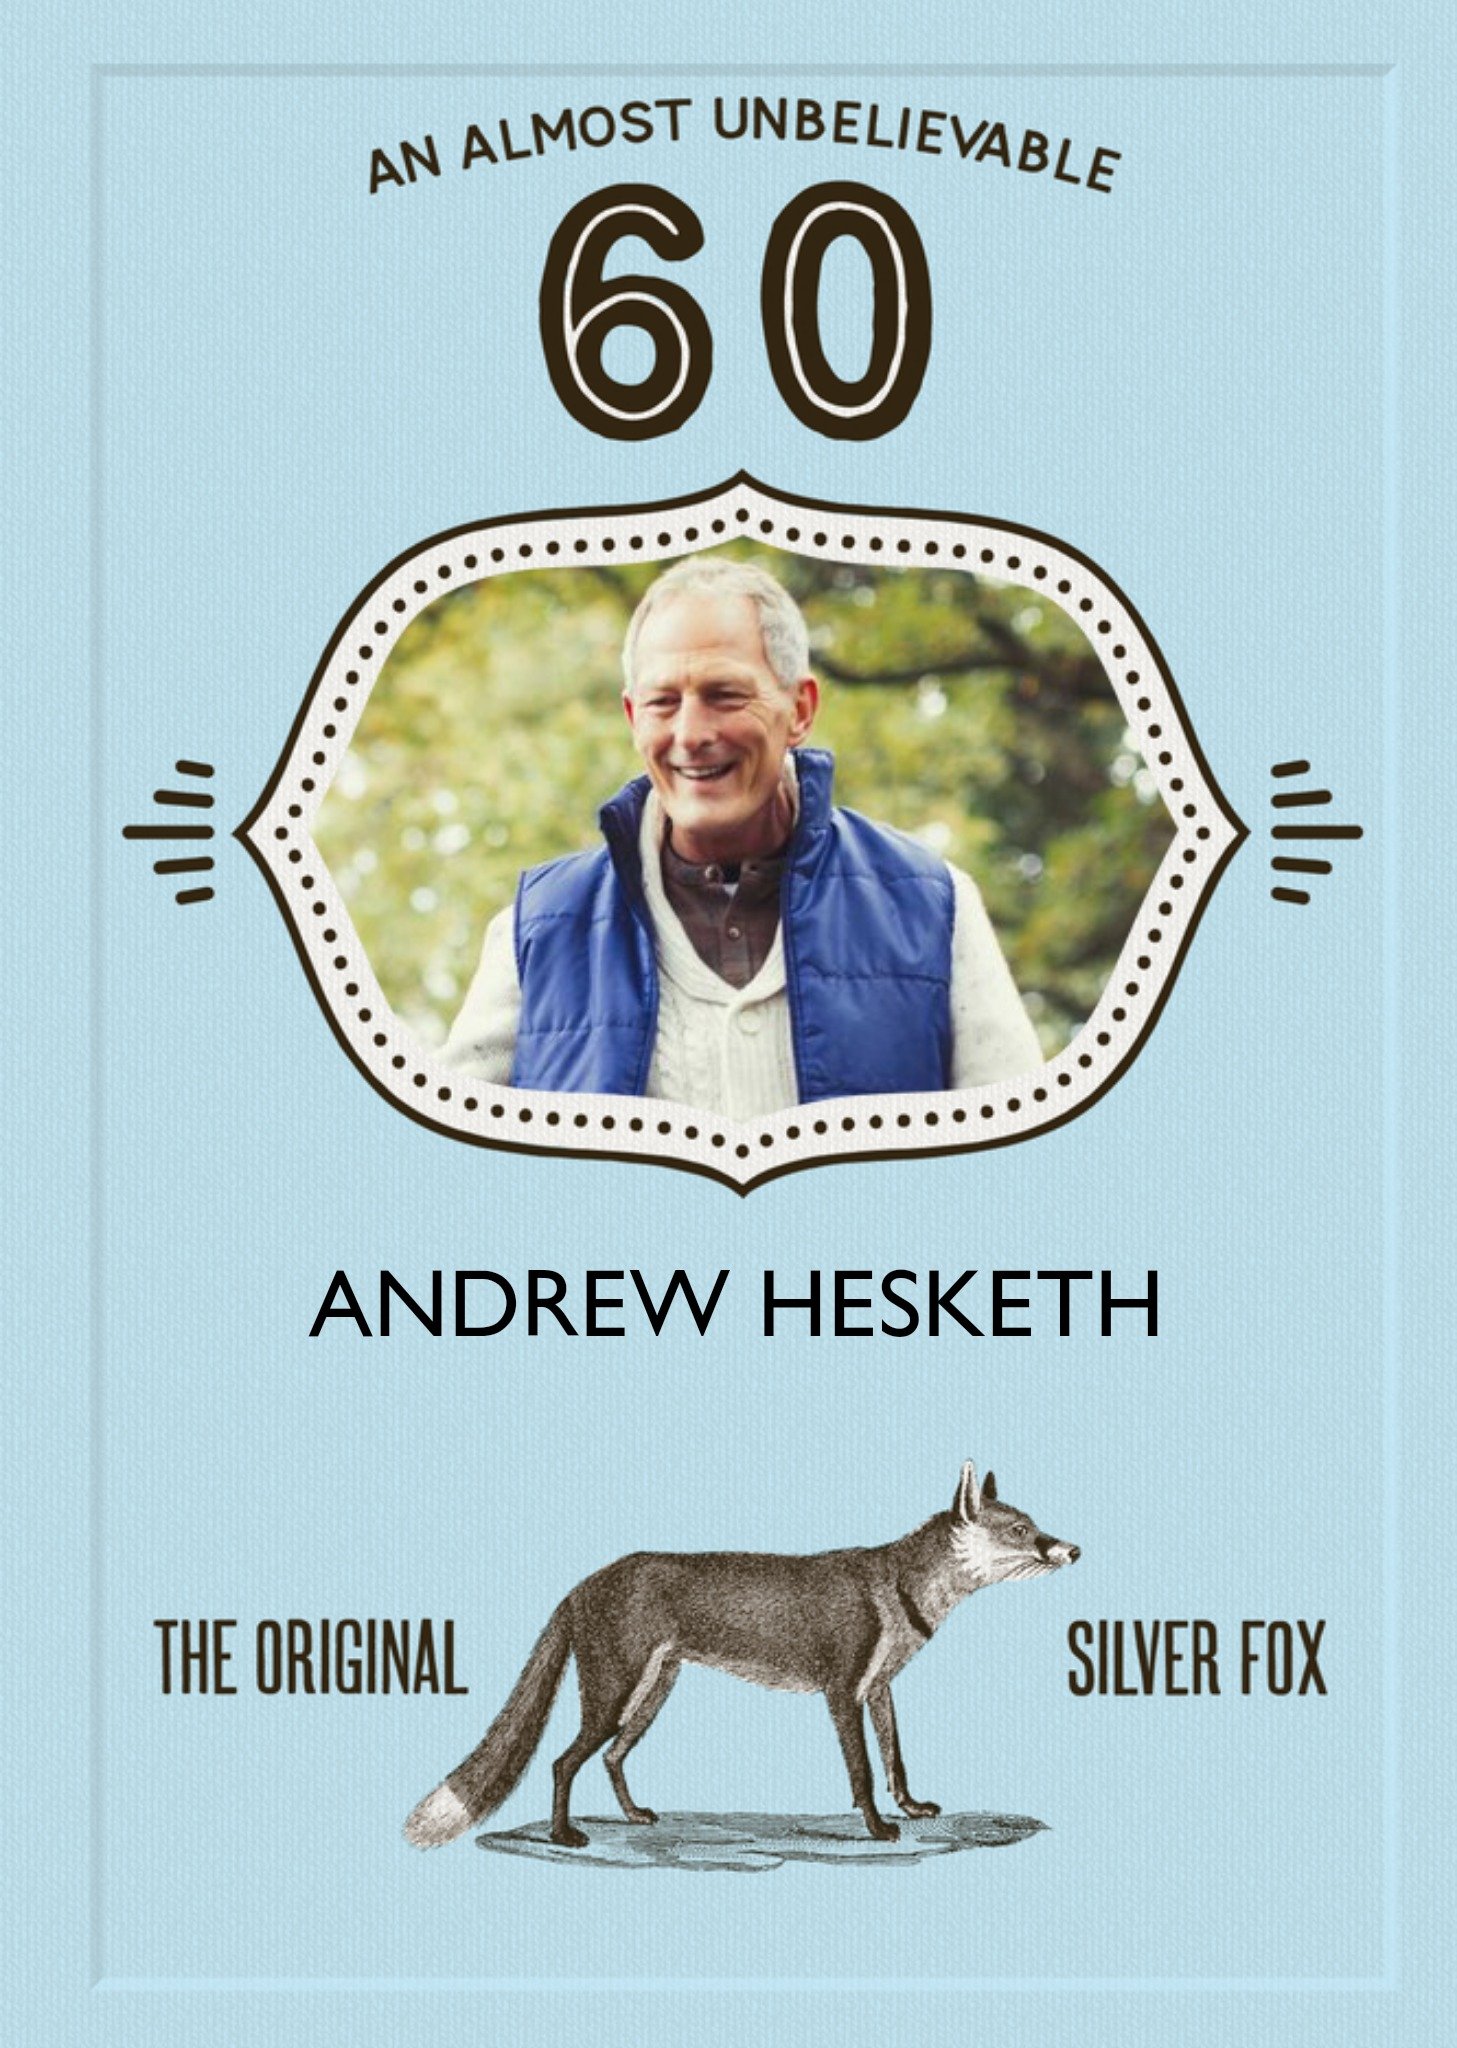 Moonpig Funny Retro 60th Birthday Card the Original Silver Fox, Large